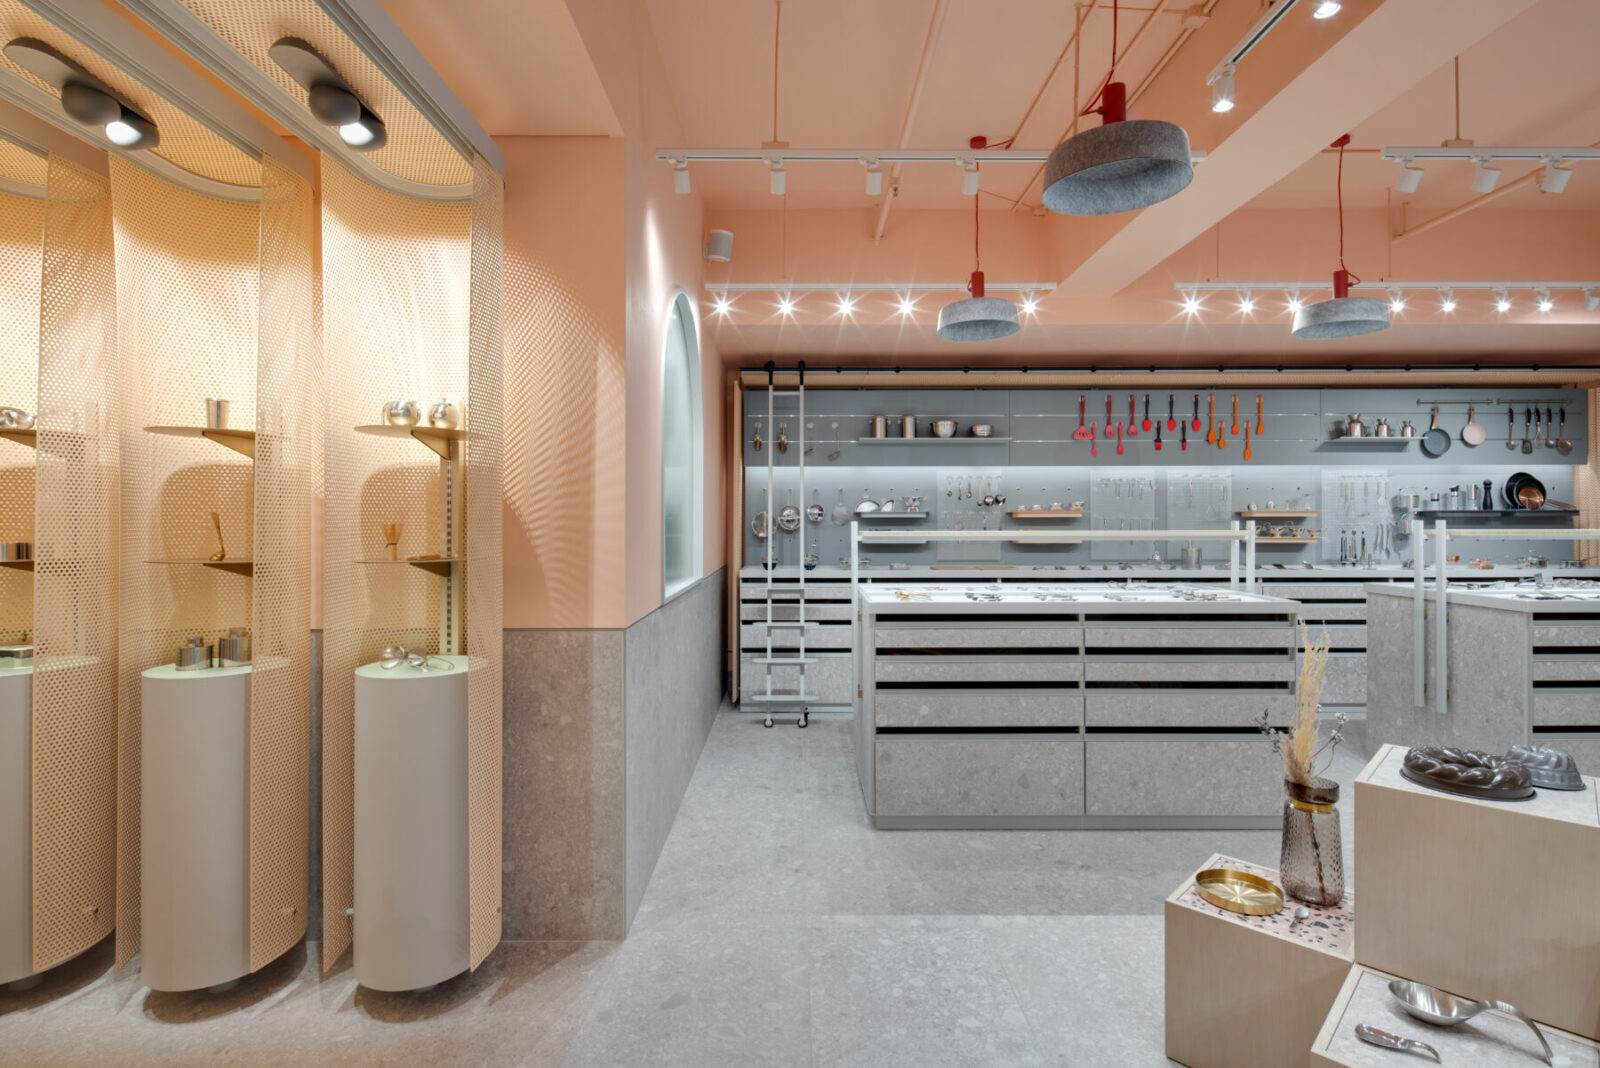 Archisearch Studio X creates sumptuous kitchen gadget showroom for key supplier to Williams Sonoma